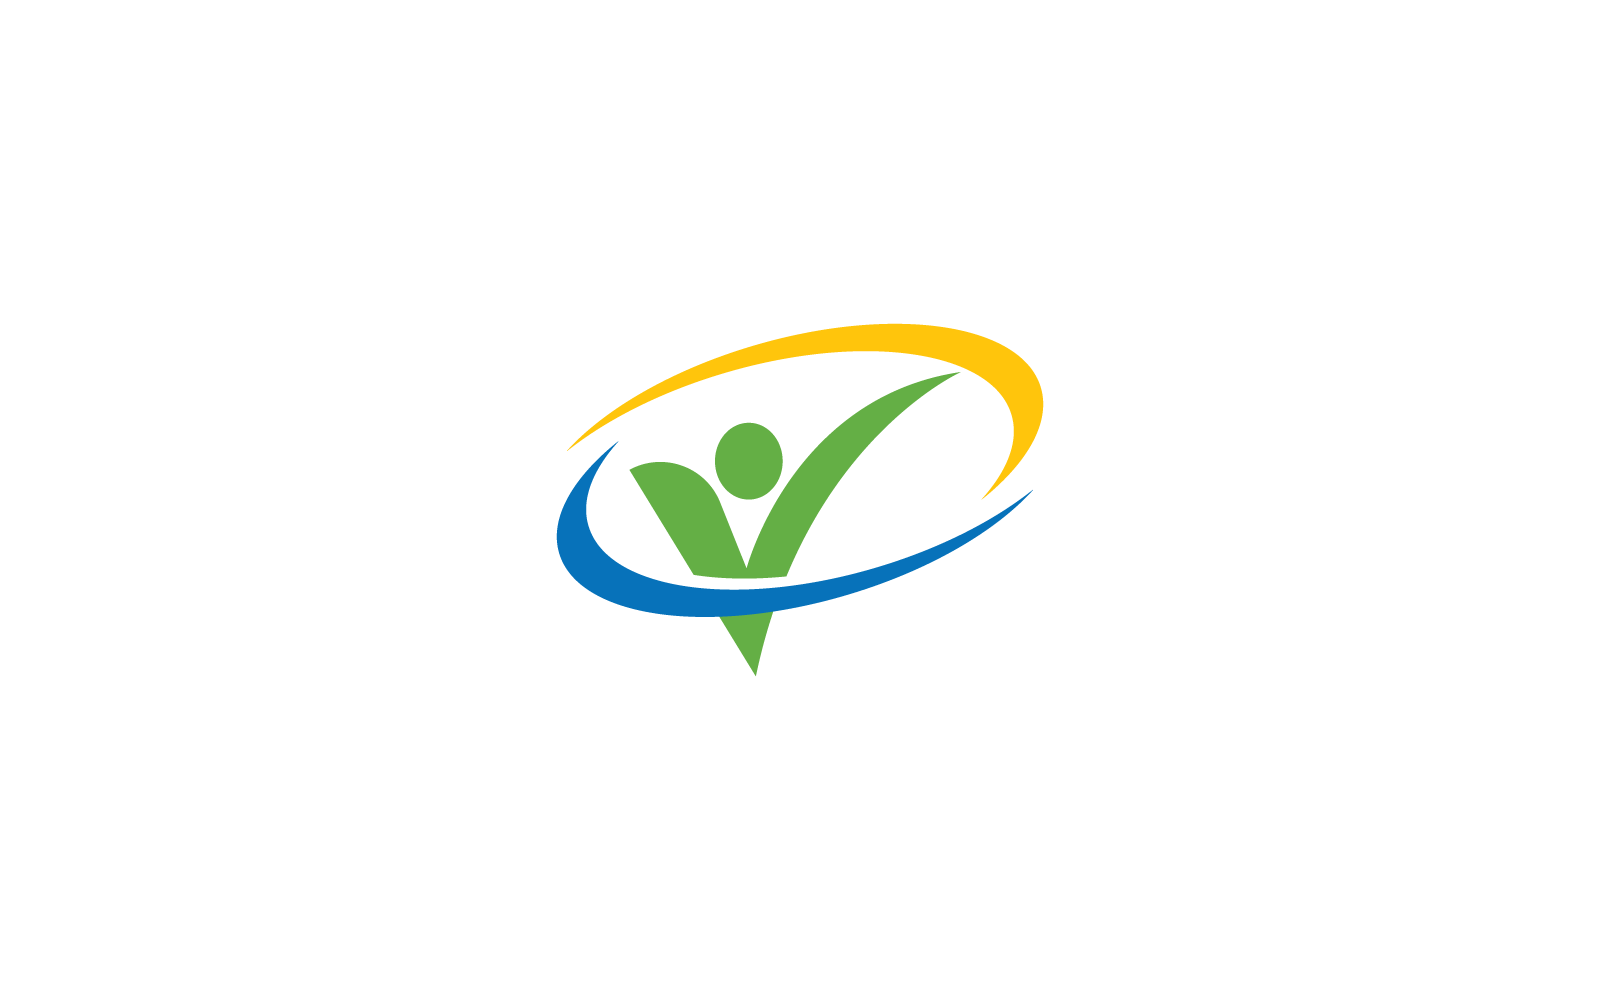 Healthy Life people illustration vector logo design Logo Template